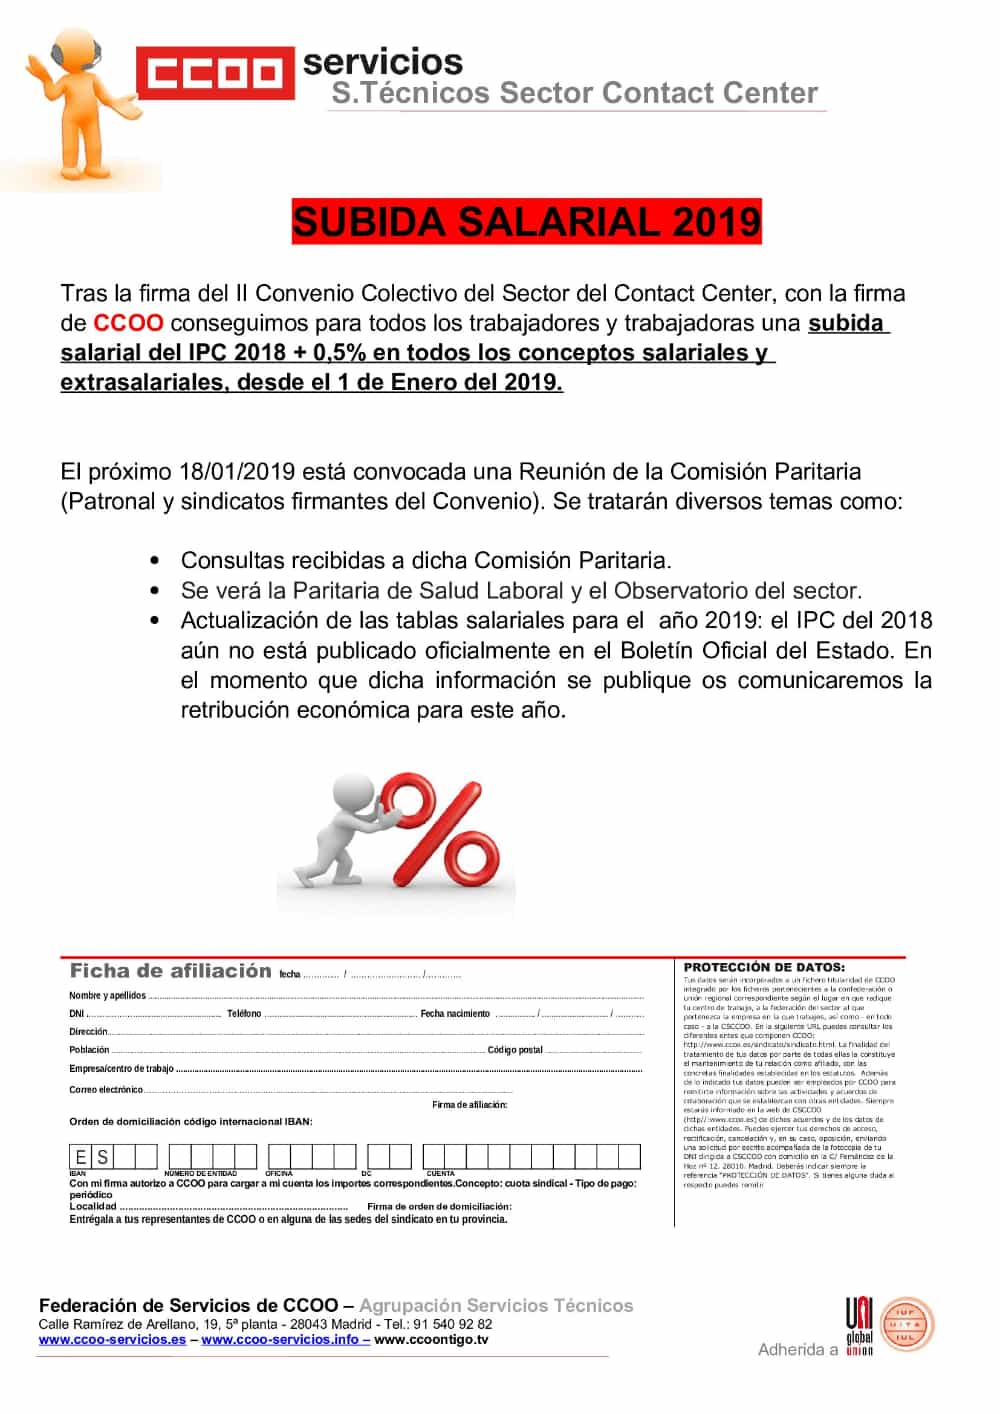 Subida Salarial Telemarketing 2019